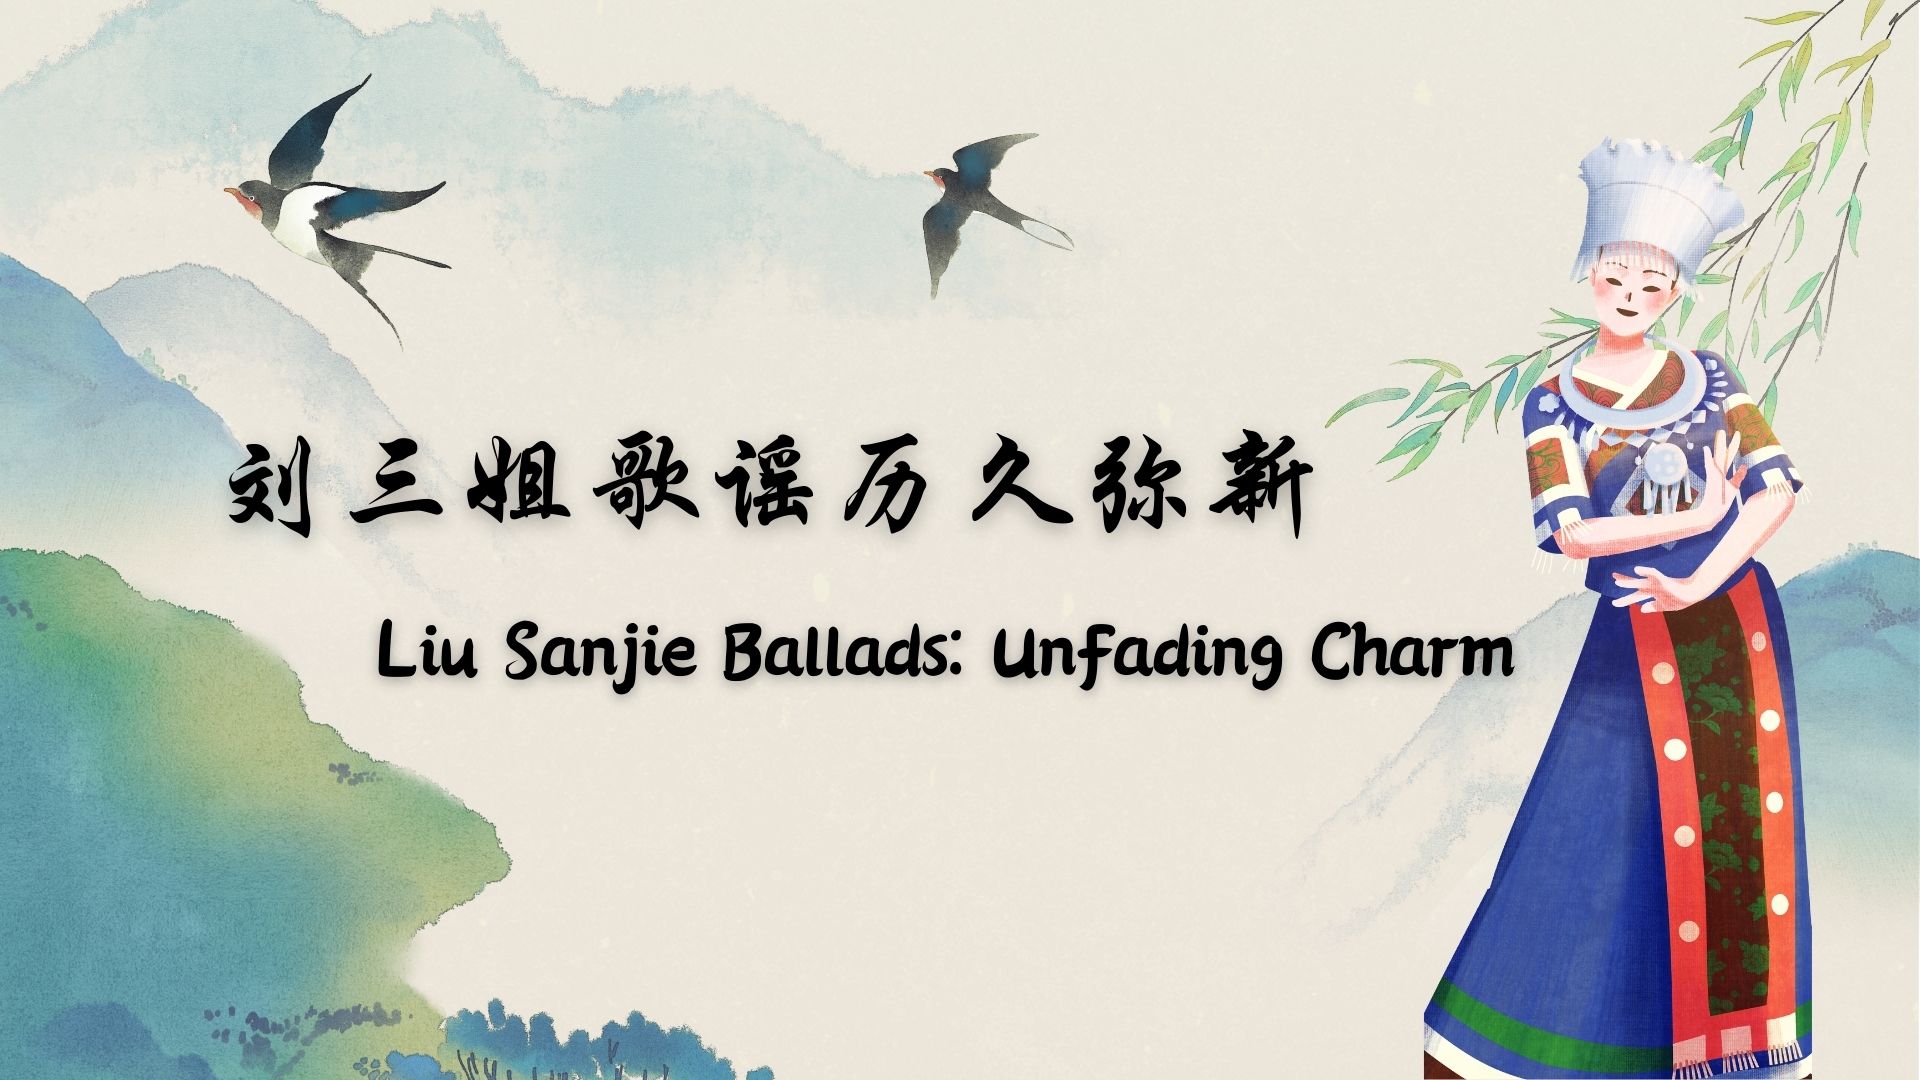 Liu Sanjie Ballads: Unfading Charm